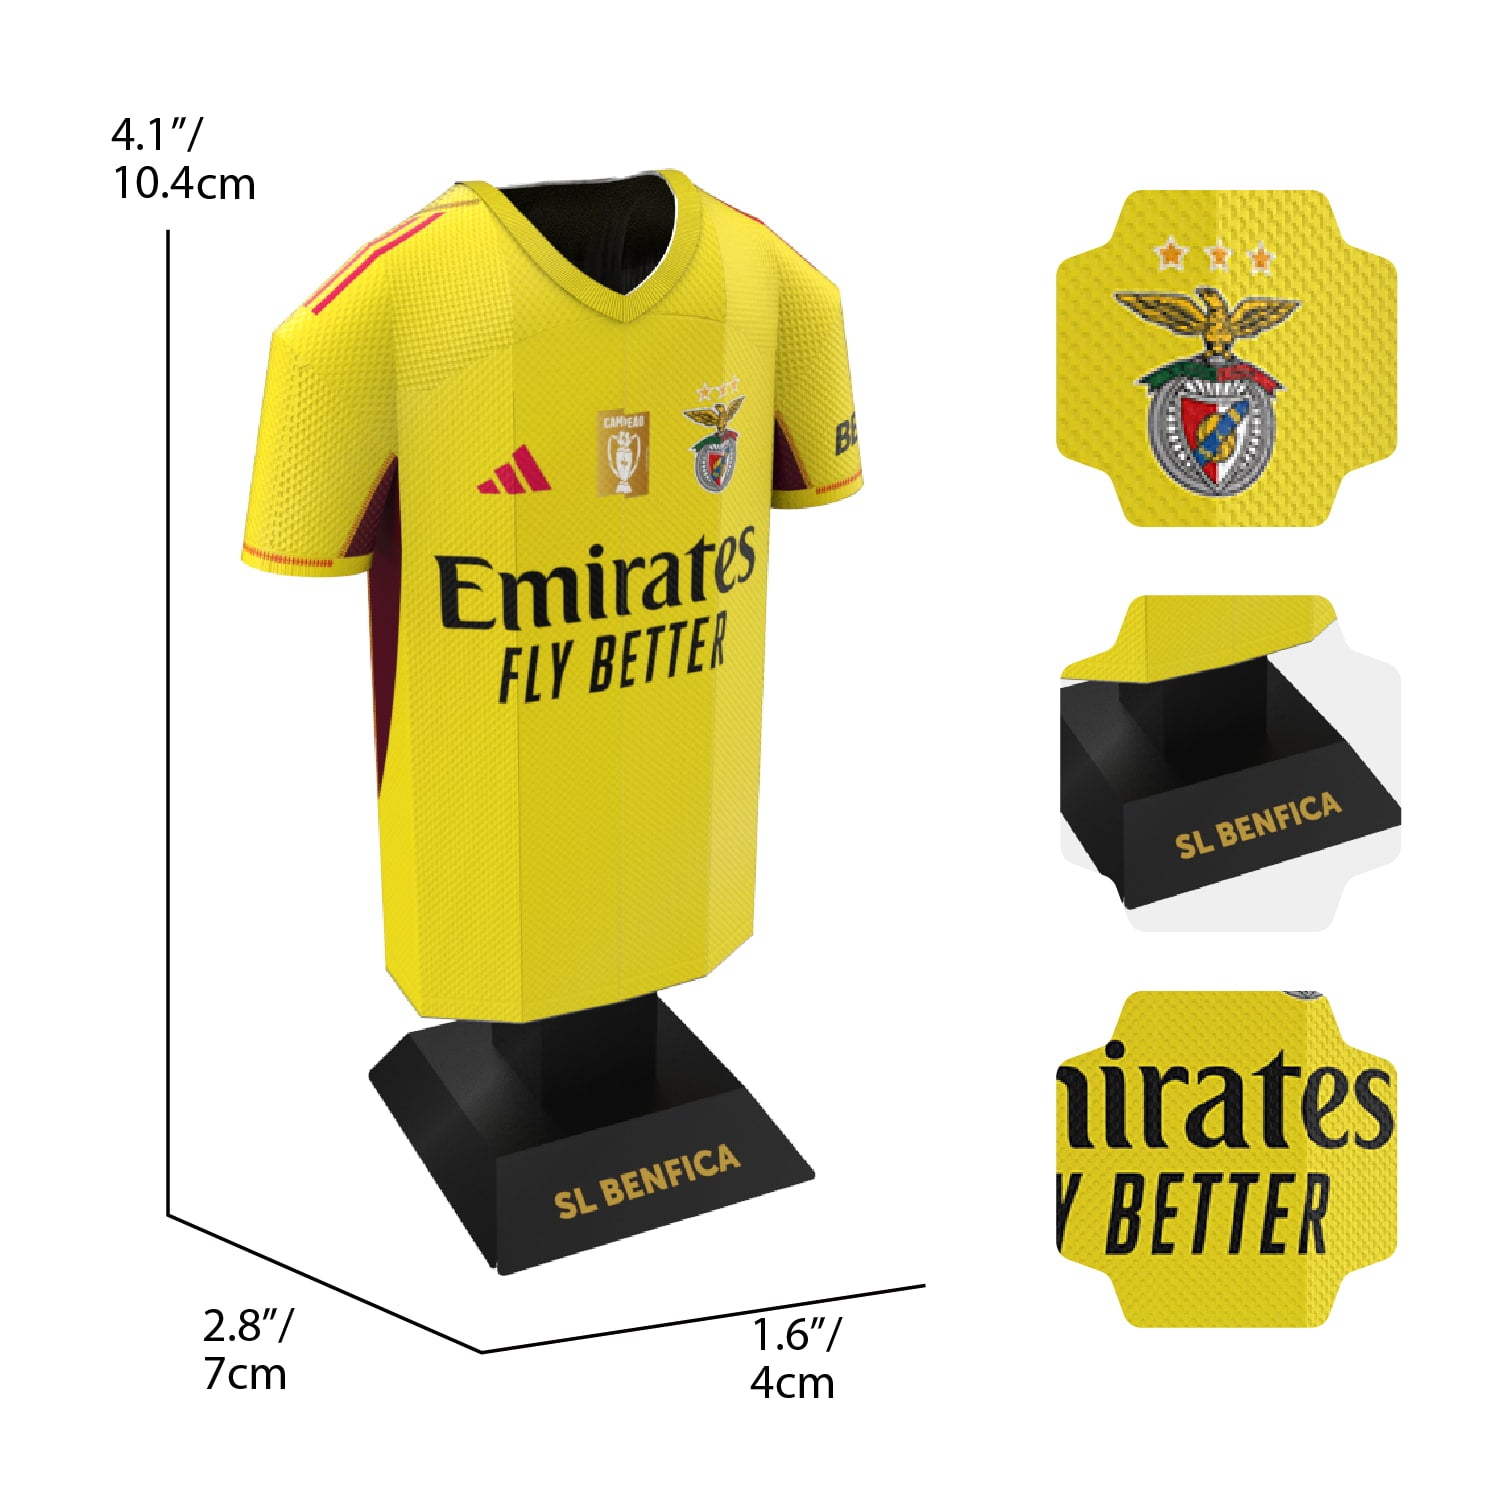 Benfica goalkeeper kit size image